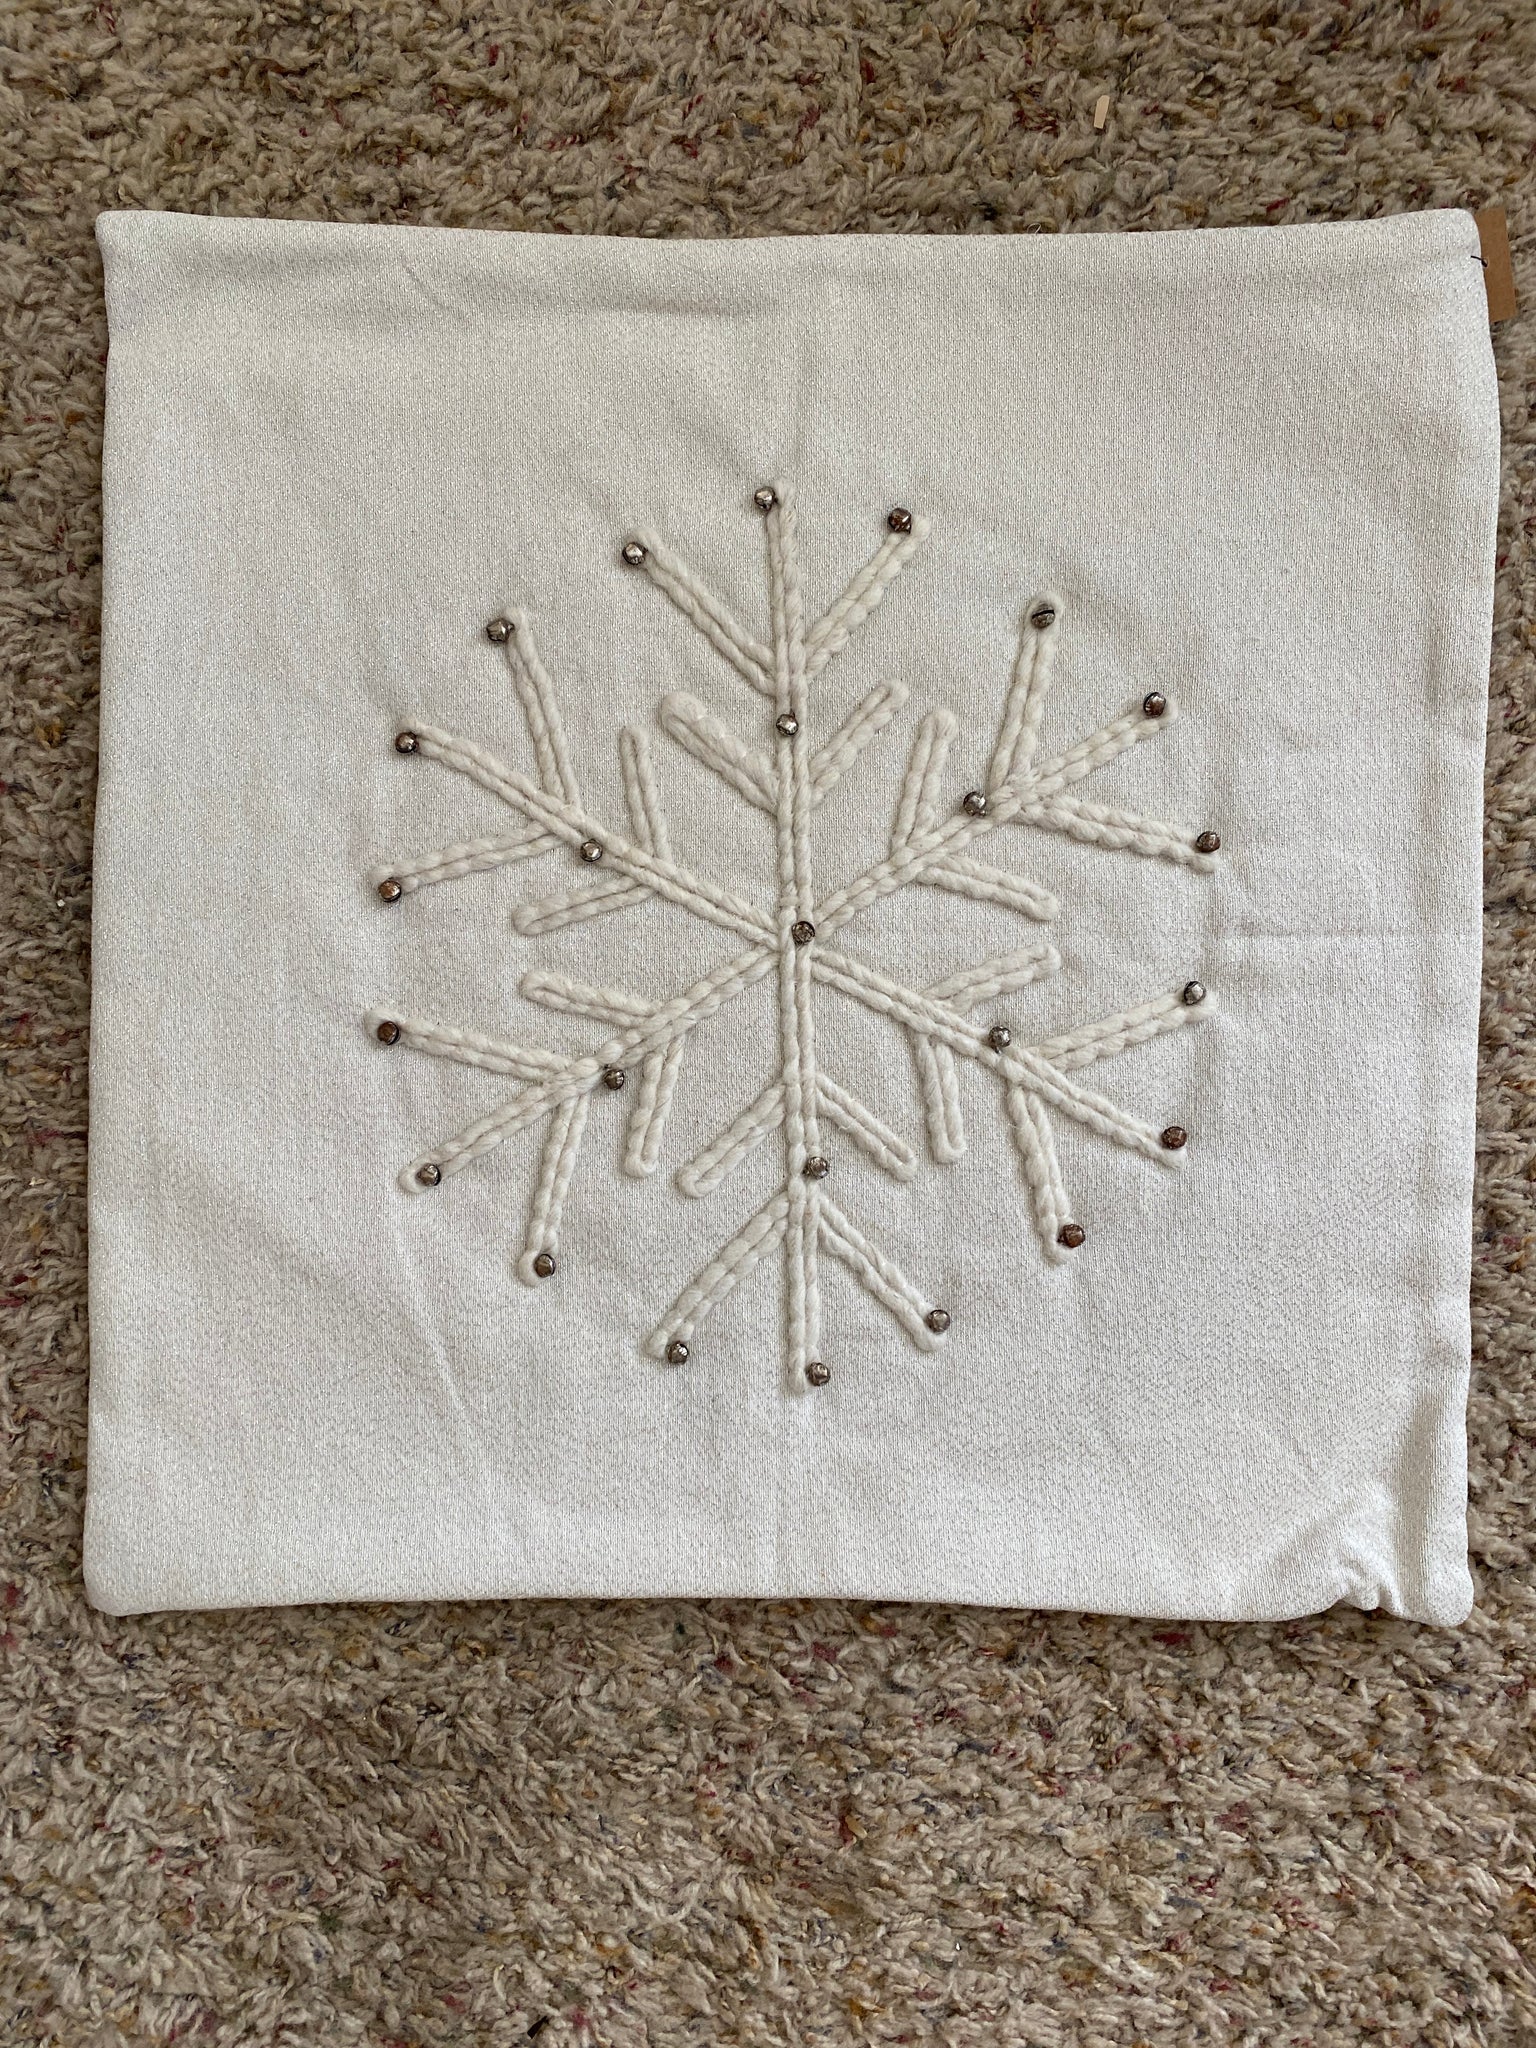 Cotton Snowflake pillow with Embroidered Snowflake